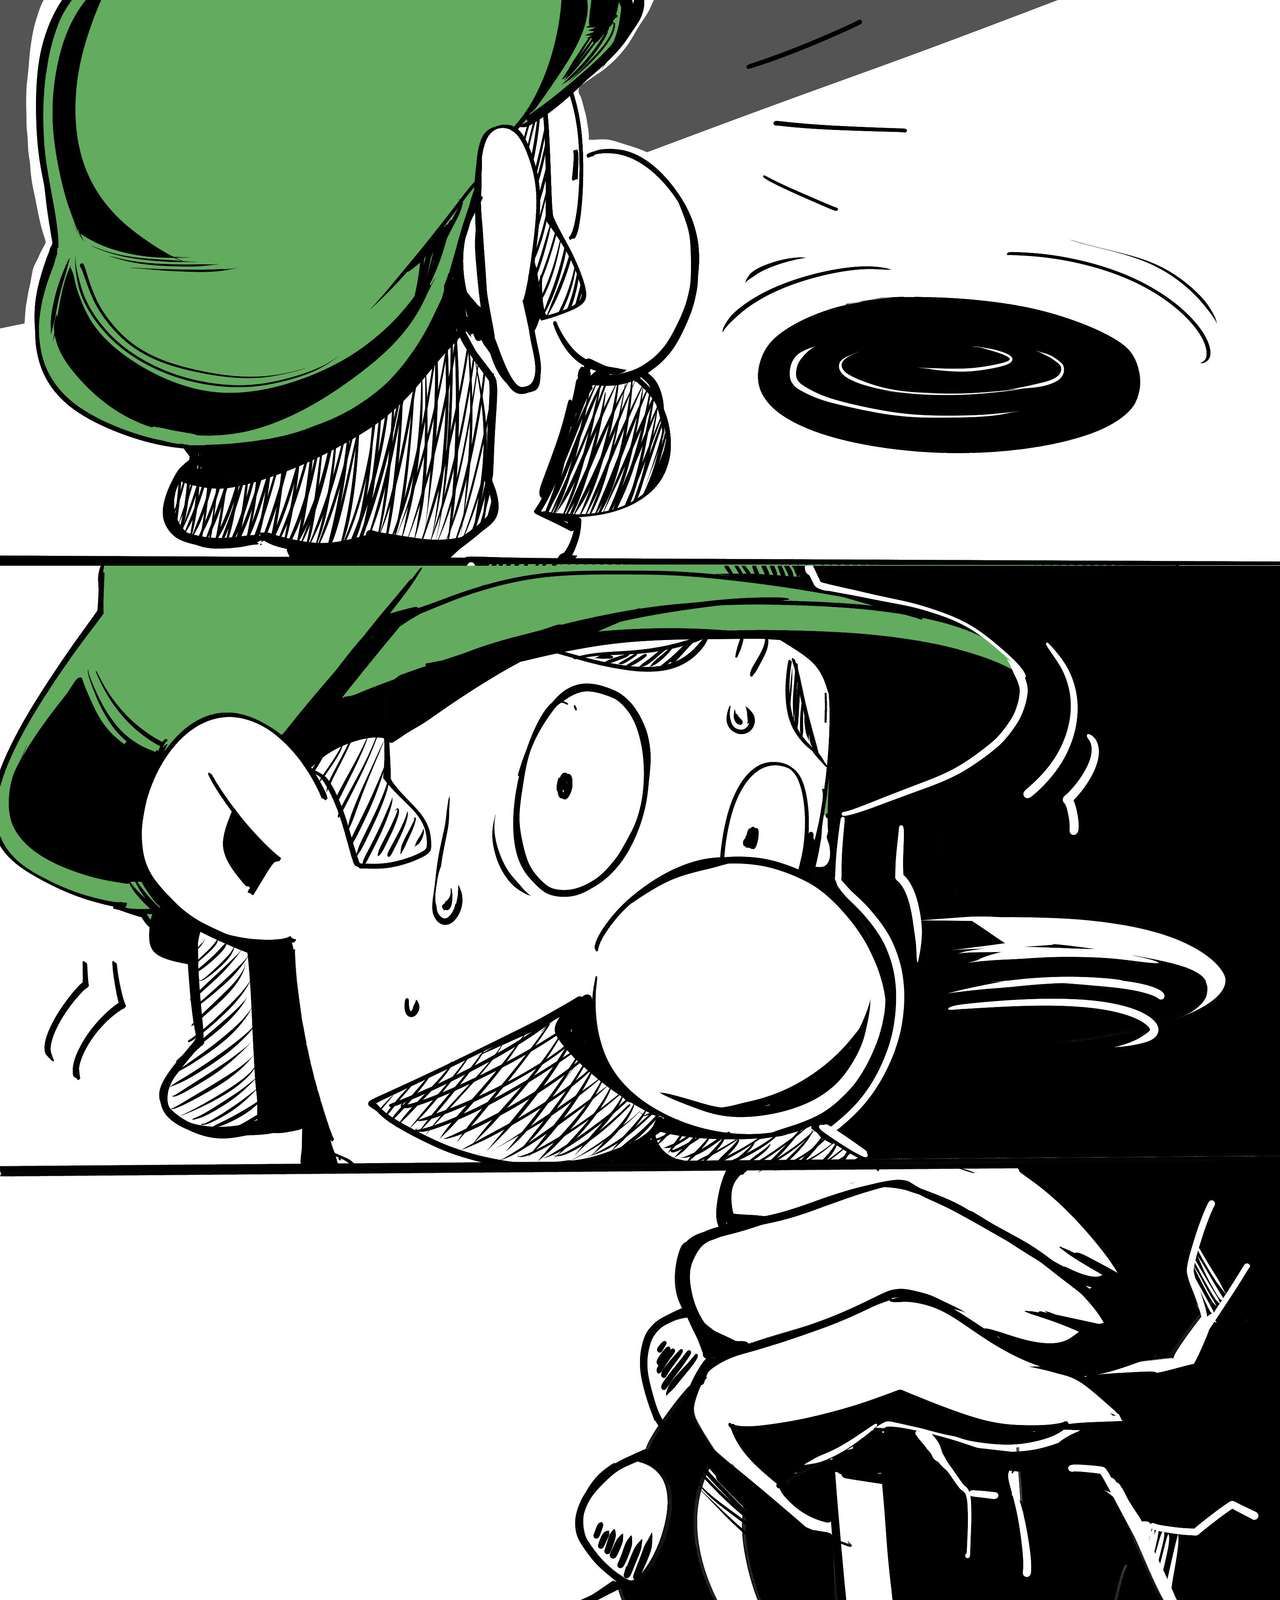 [Nisego] Inktober 2 - Luigi's Mansion (Super Mario Bros.) [Ongoing] 43